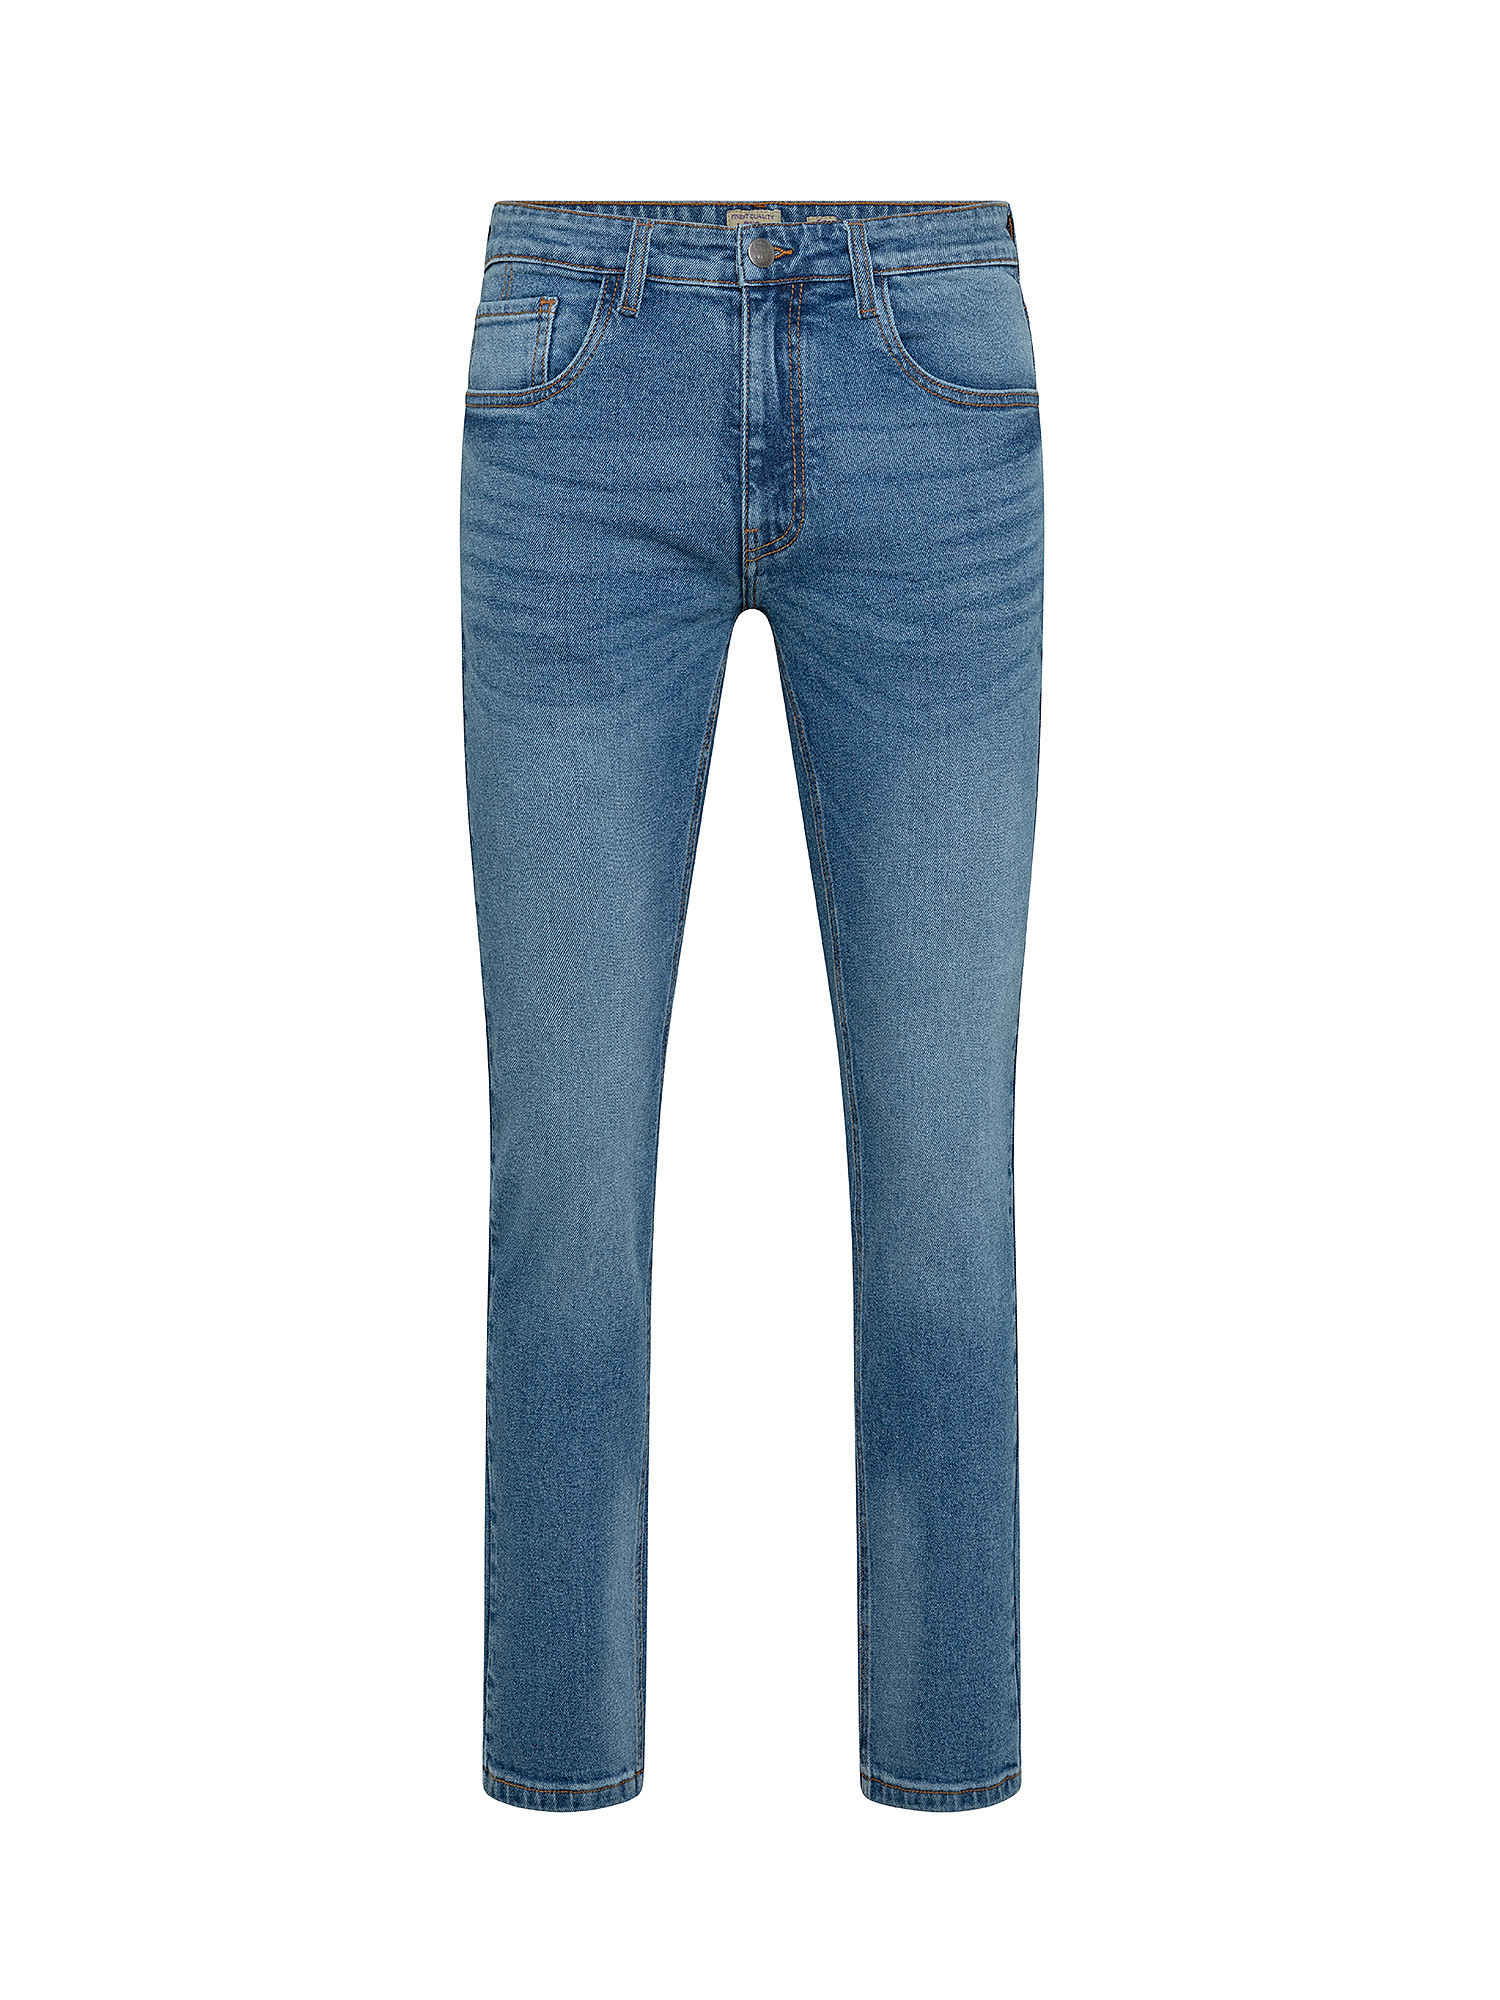 Jeans cinque tasche, Blu, large image number 0